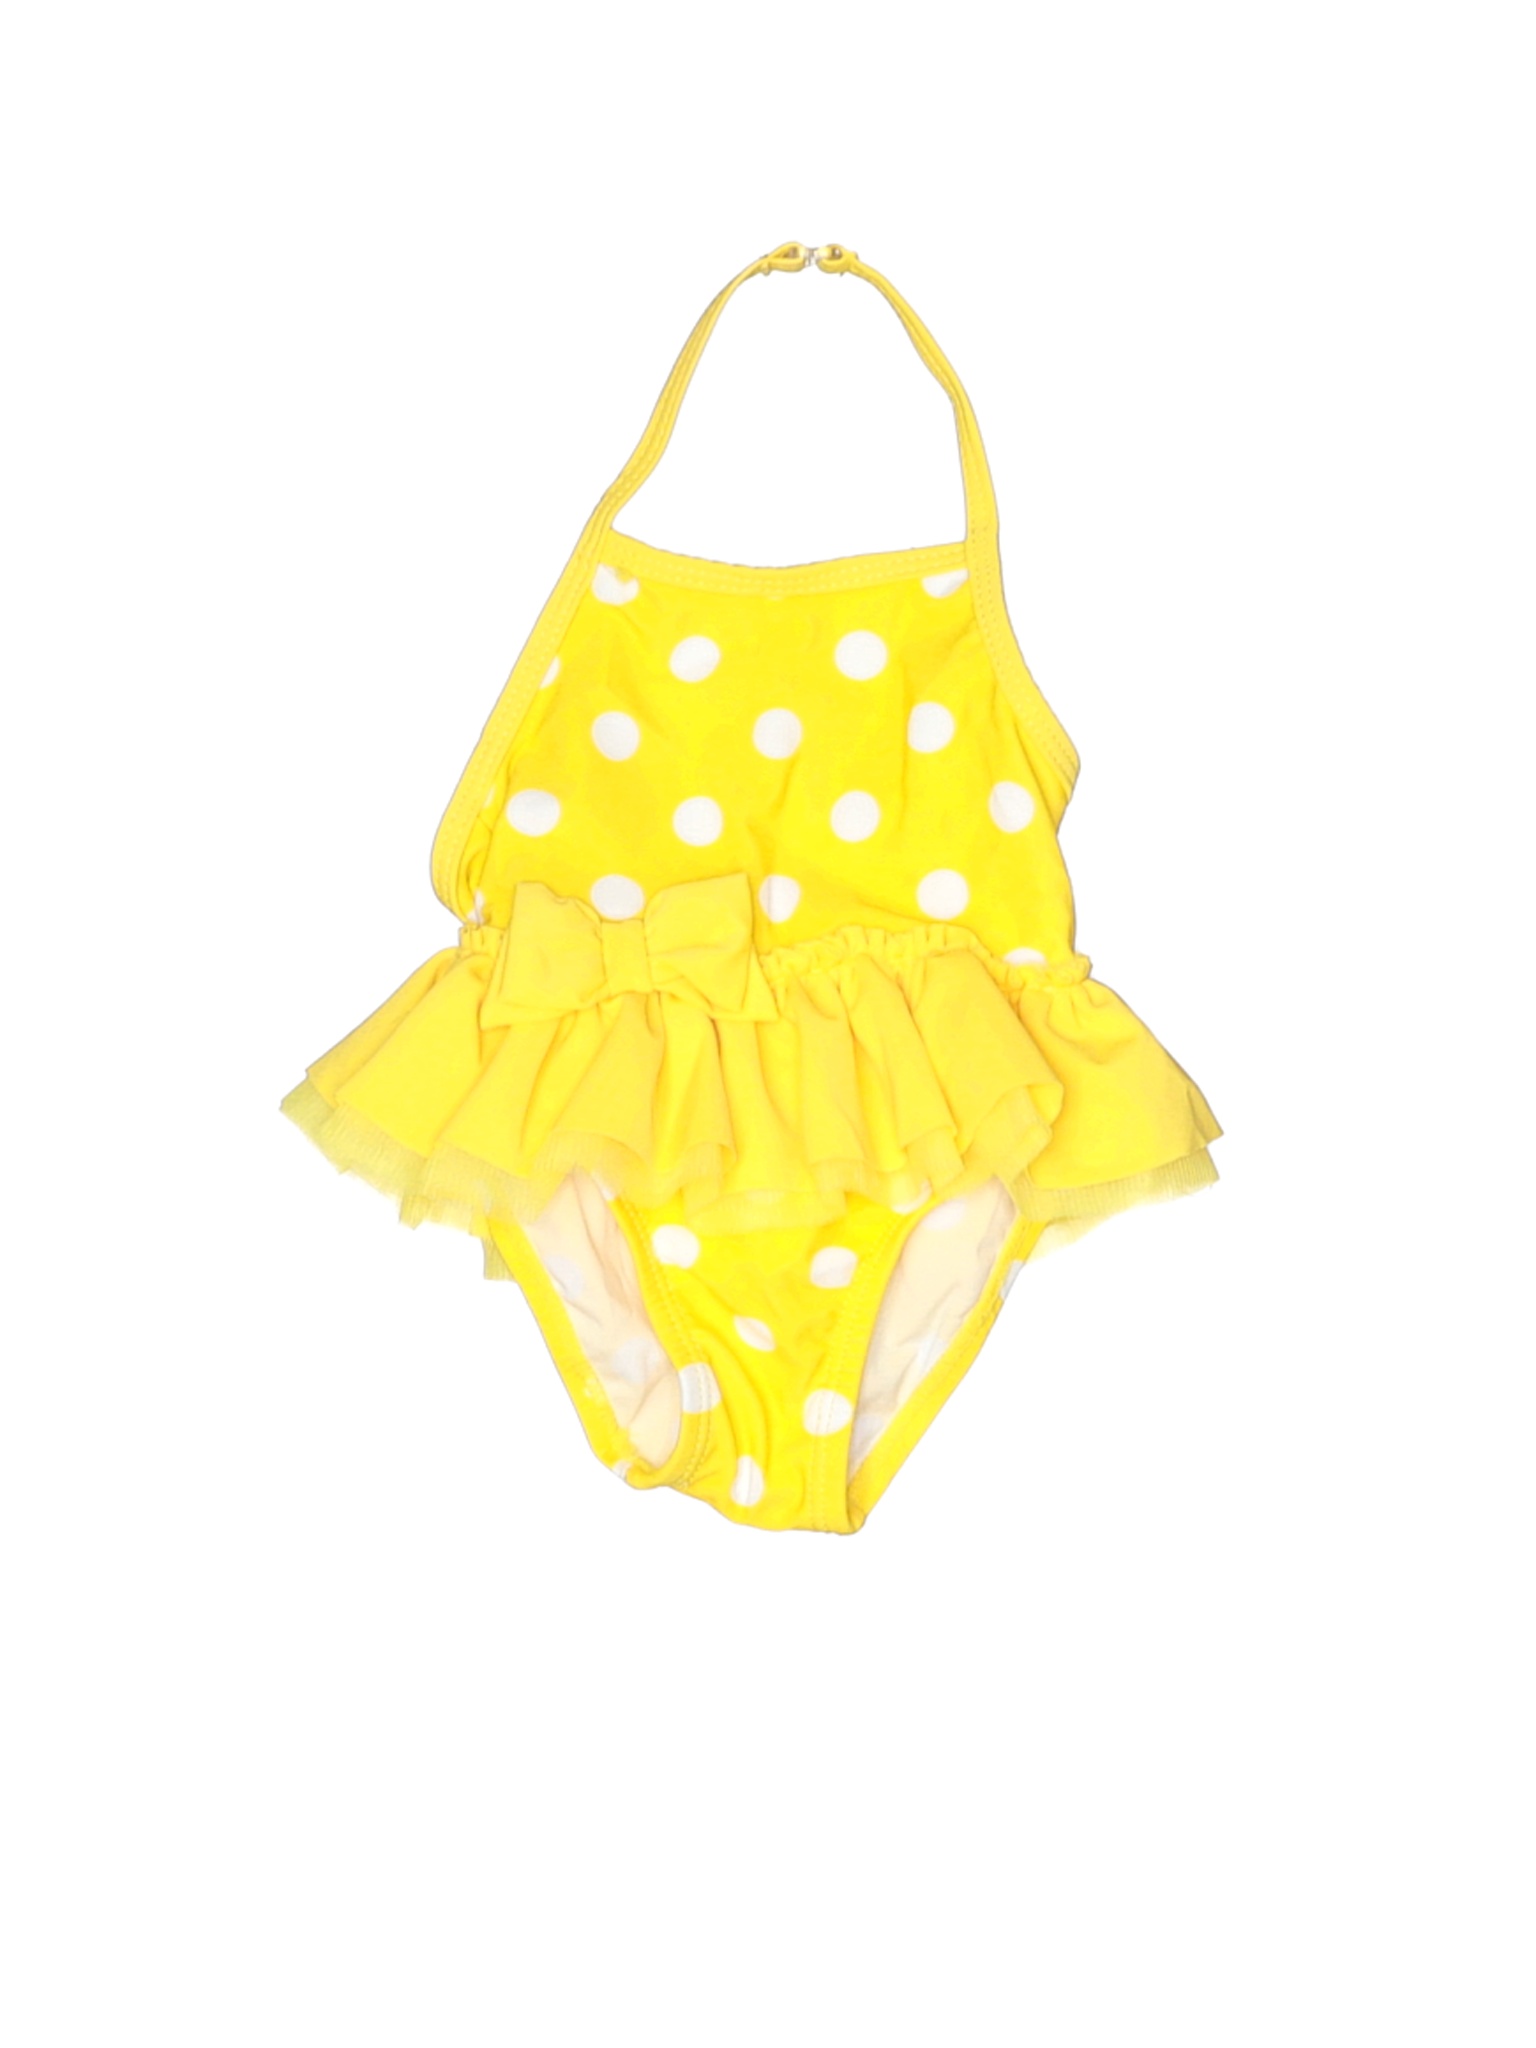 Koala Baby Girls Yellow One Piece Swimsuit 3 Months | eBay